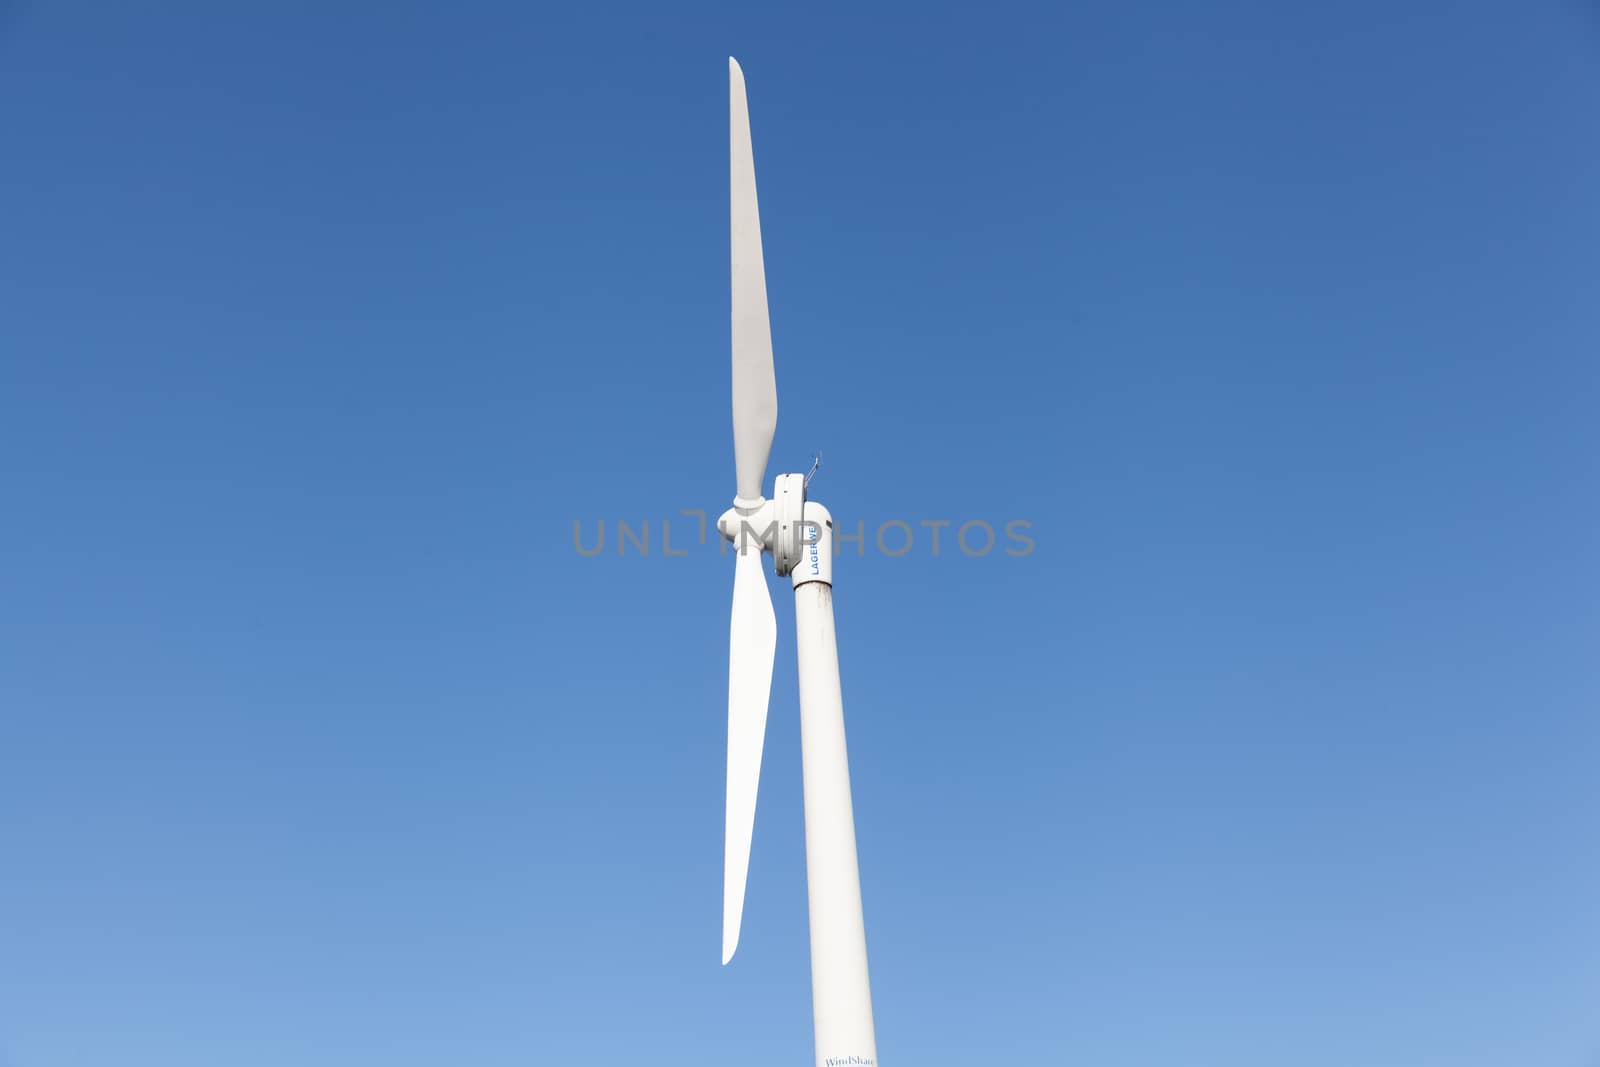 Wind energy: wind turbines and blue sky, renewable energy concept